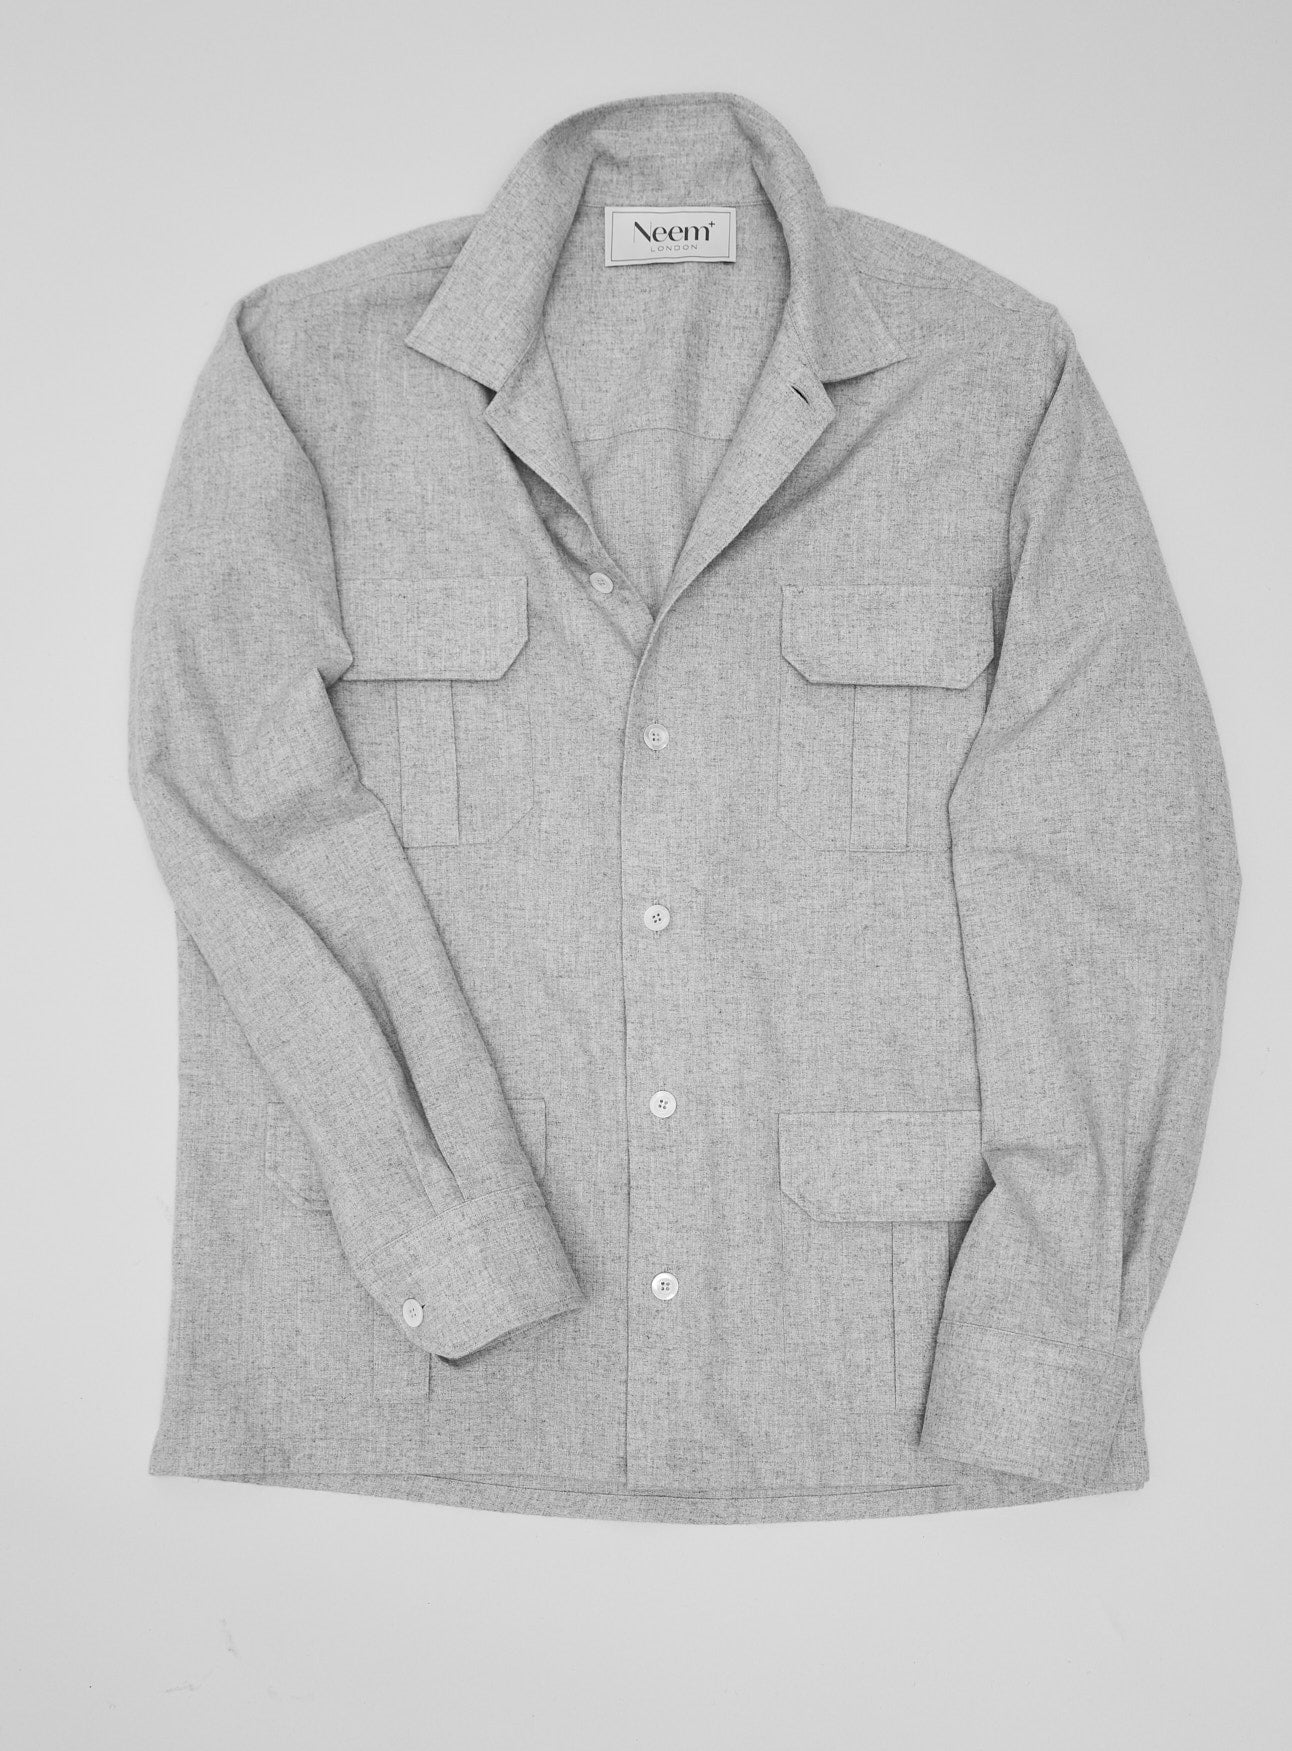 grey overshirt